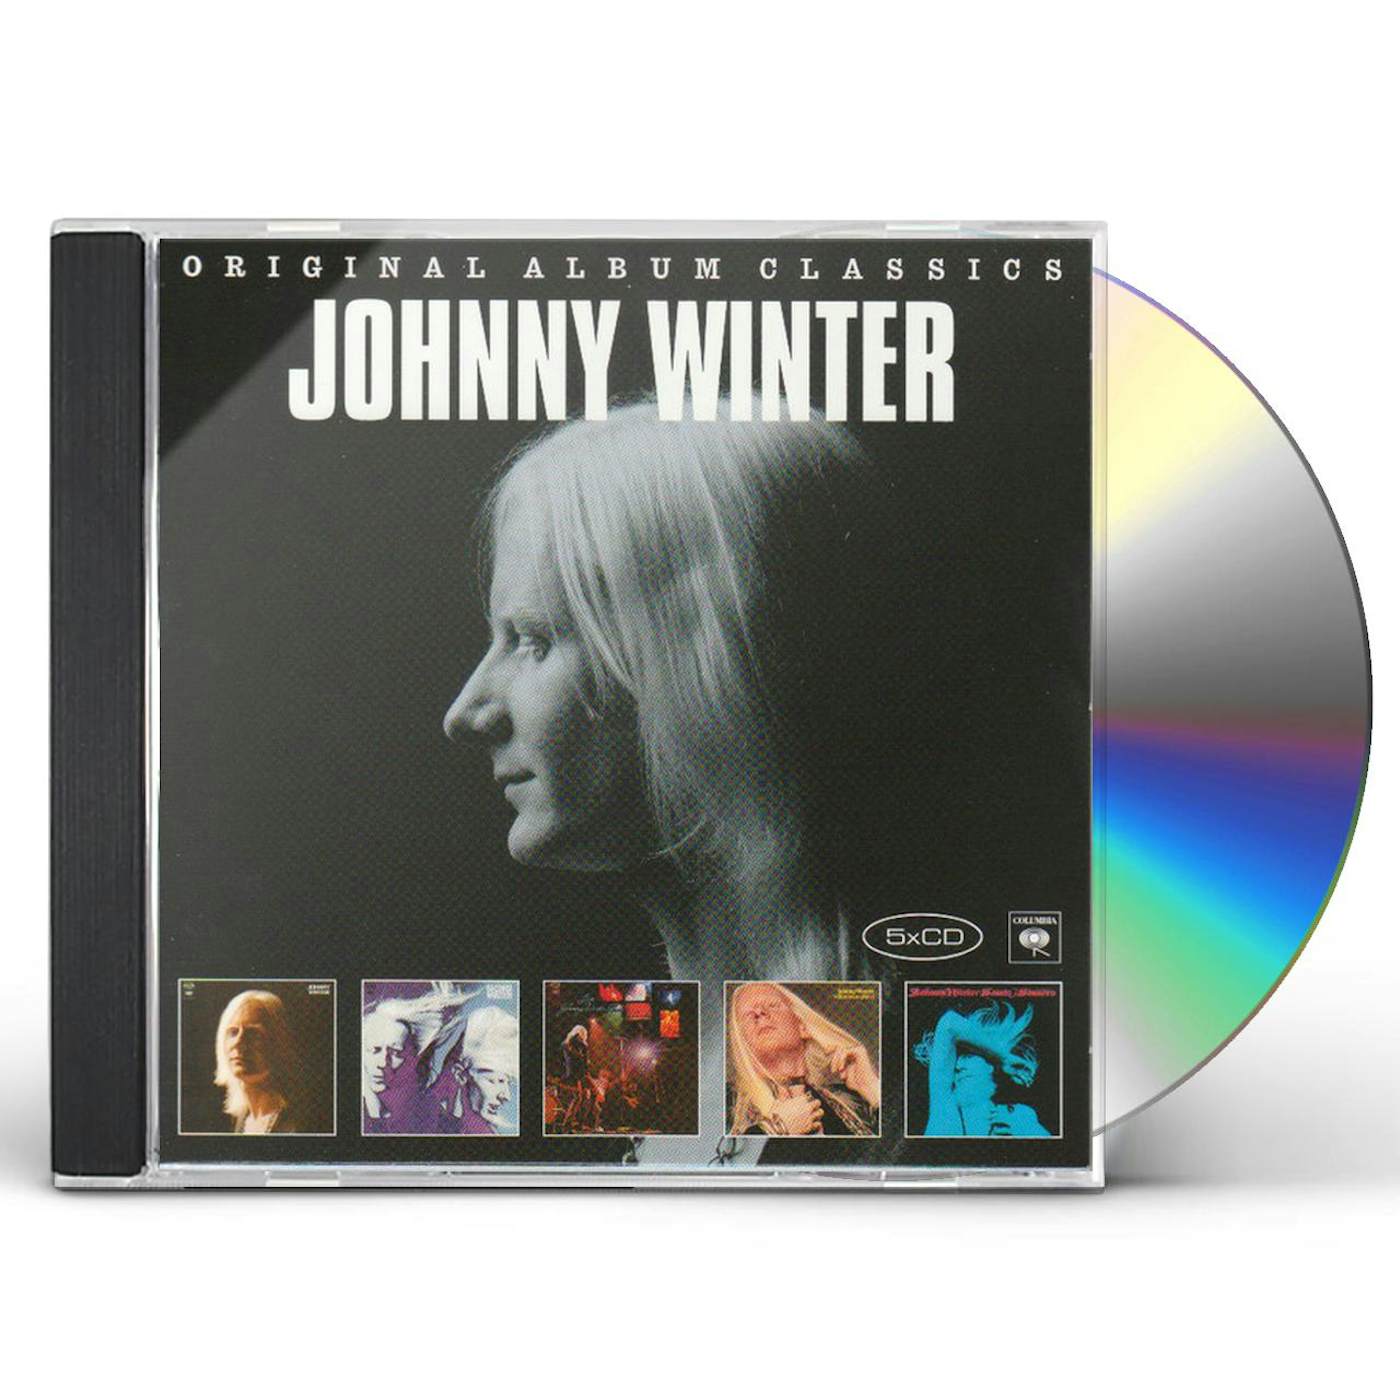 Johnny Winter ORIGINAL ALBUM CLASSICS CD